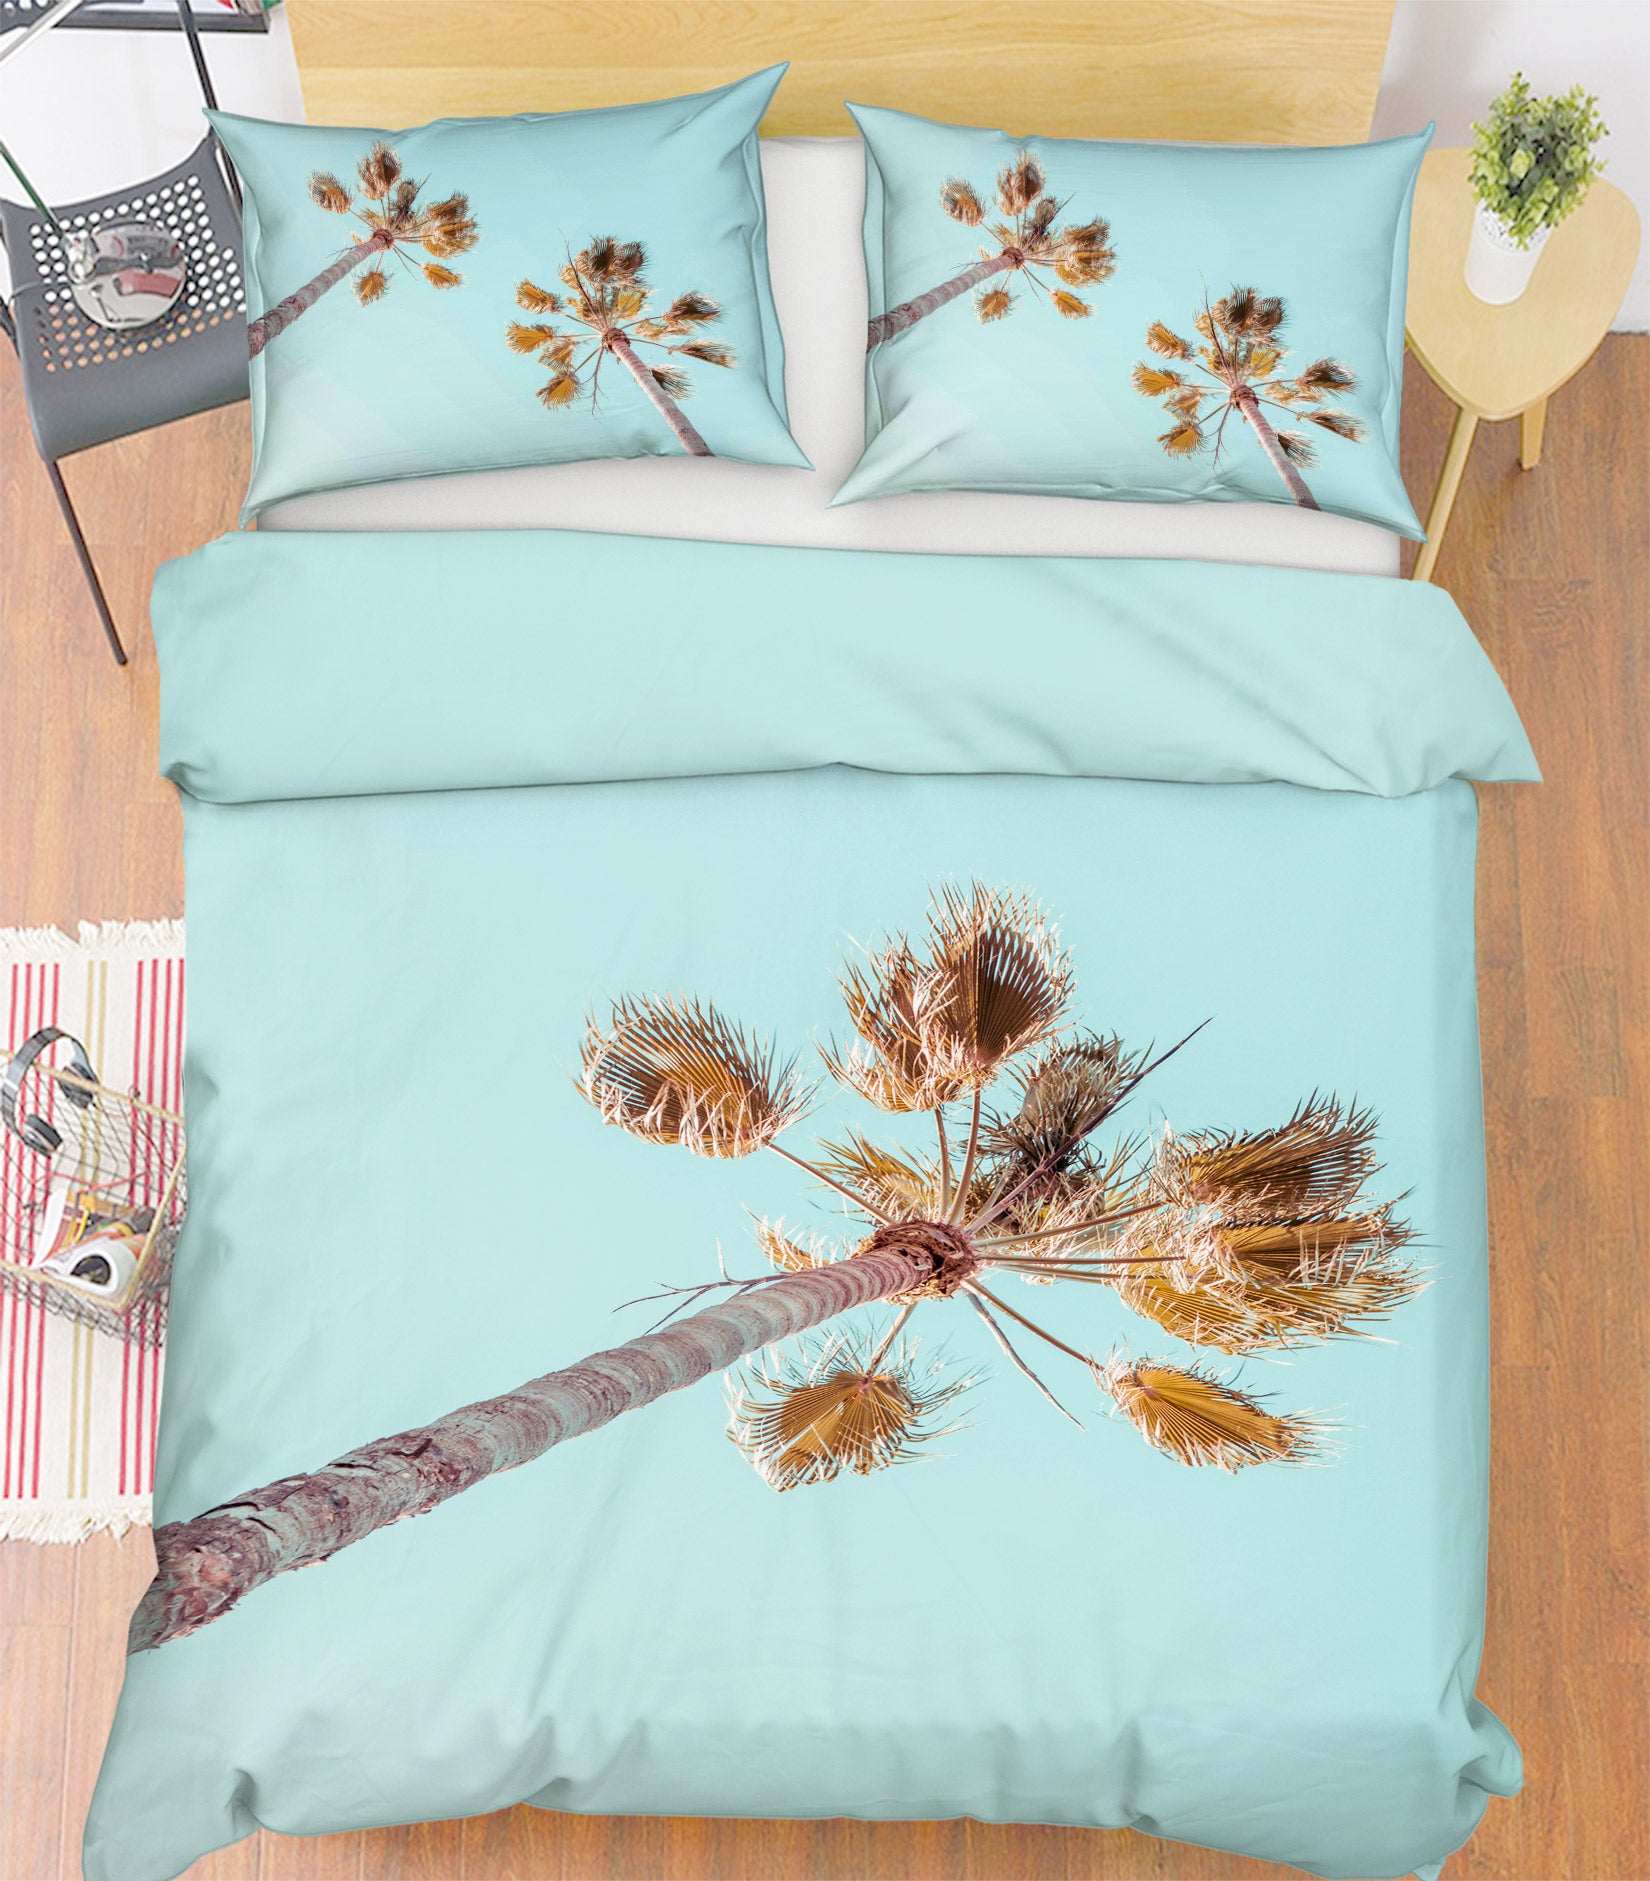 3D Tall Coconut 7005 Assaf Frank Bedding Bed Pillowcases Quilt Cover Duvet Cover